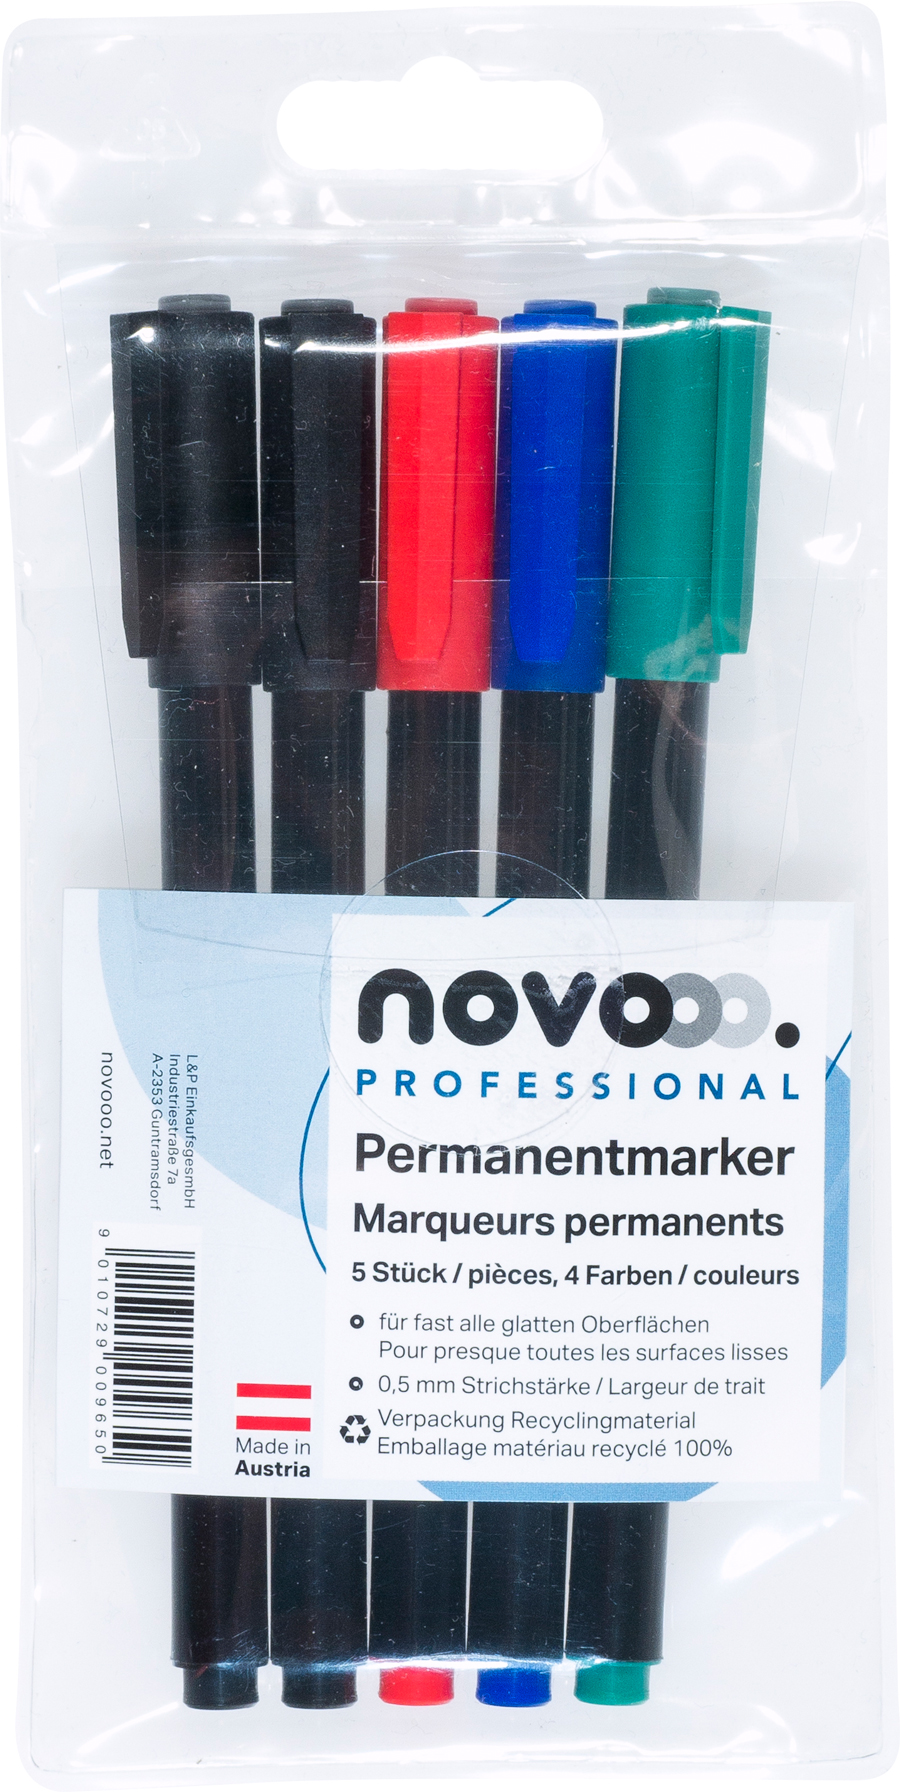 NOVOOO Professional Permanentmarker 0,5 mm 5 Stück mehrere Farben